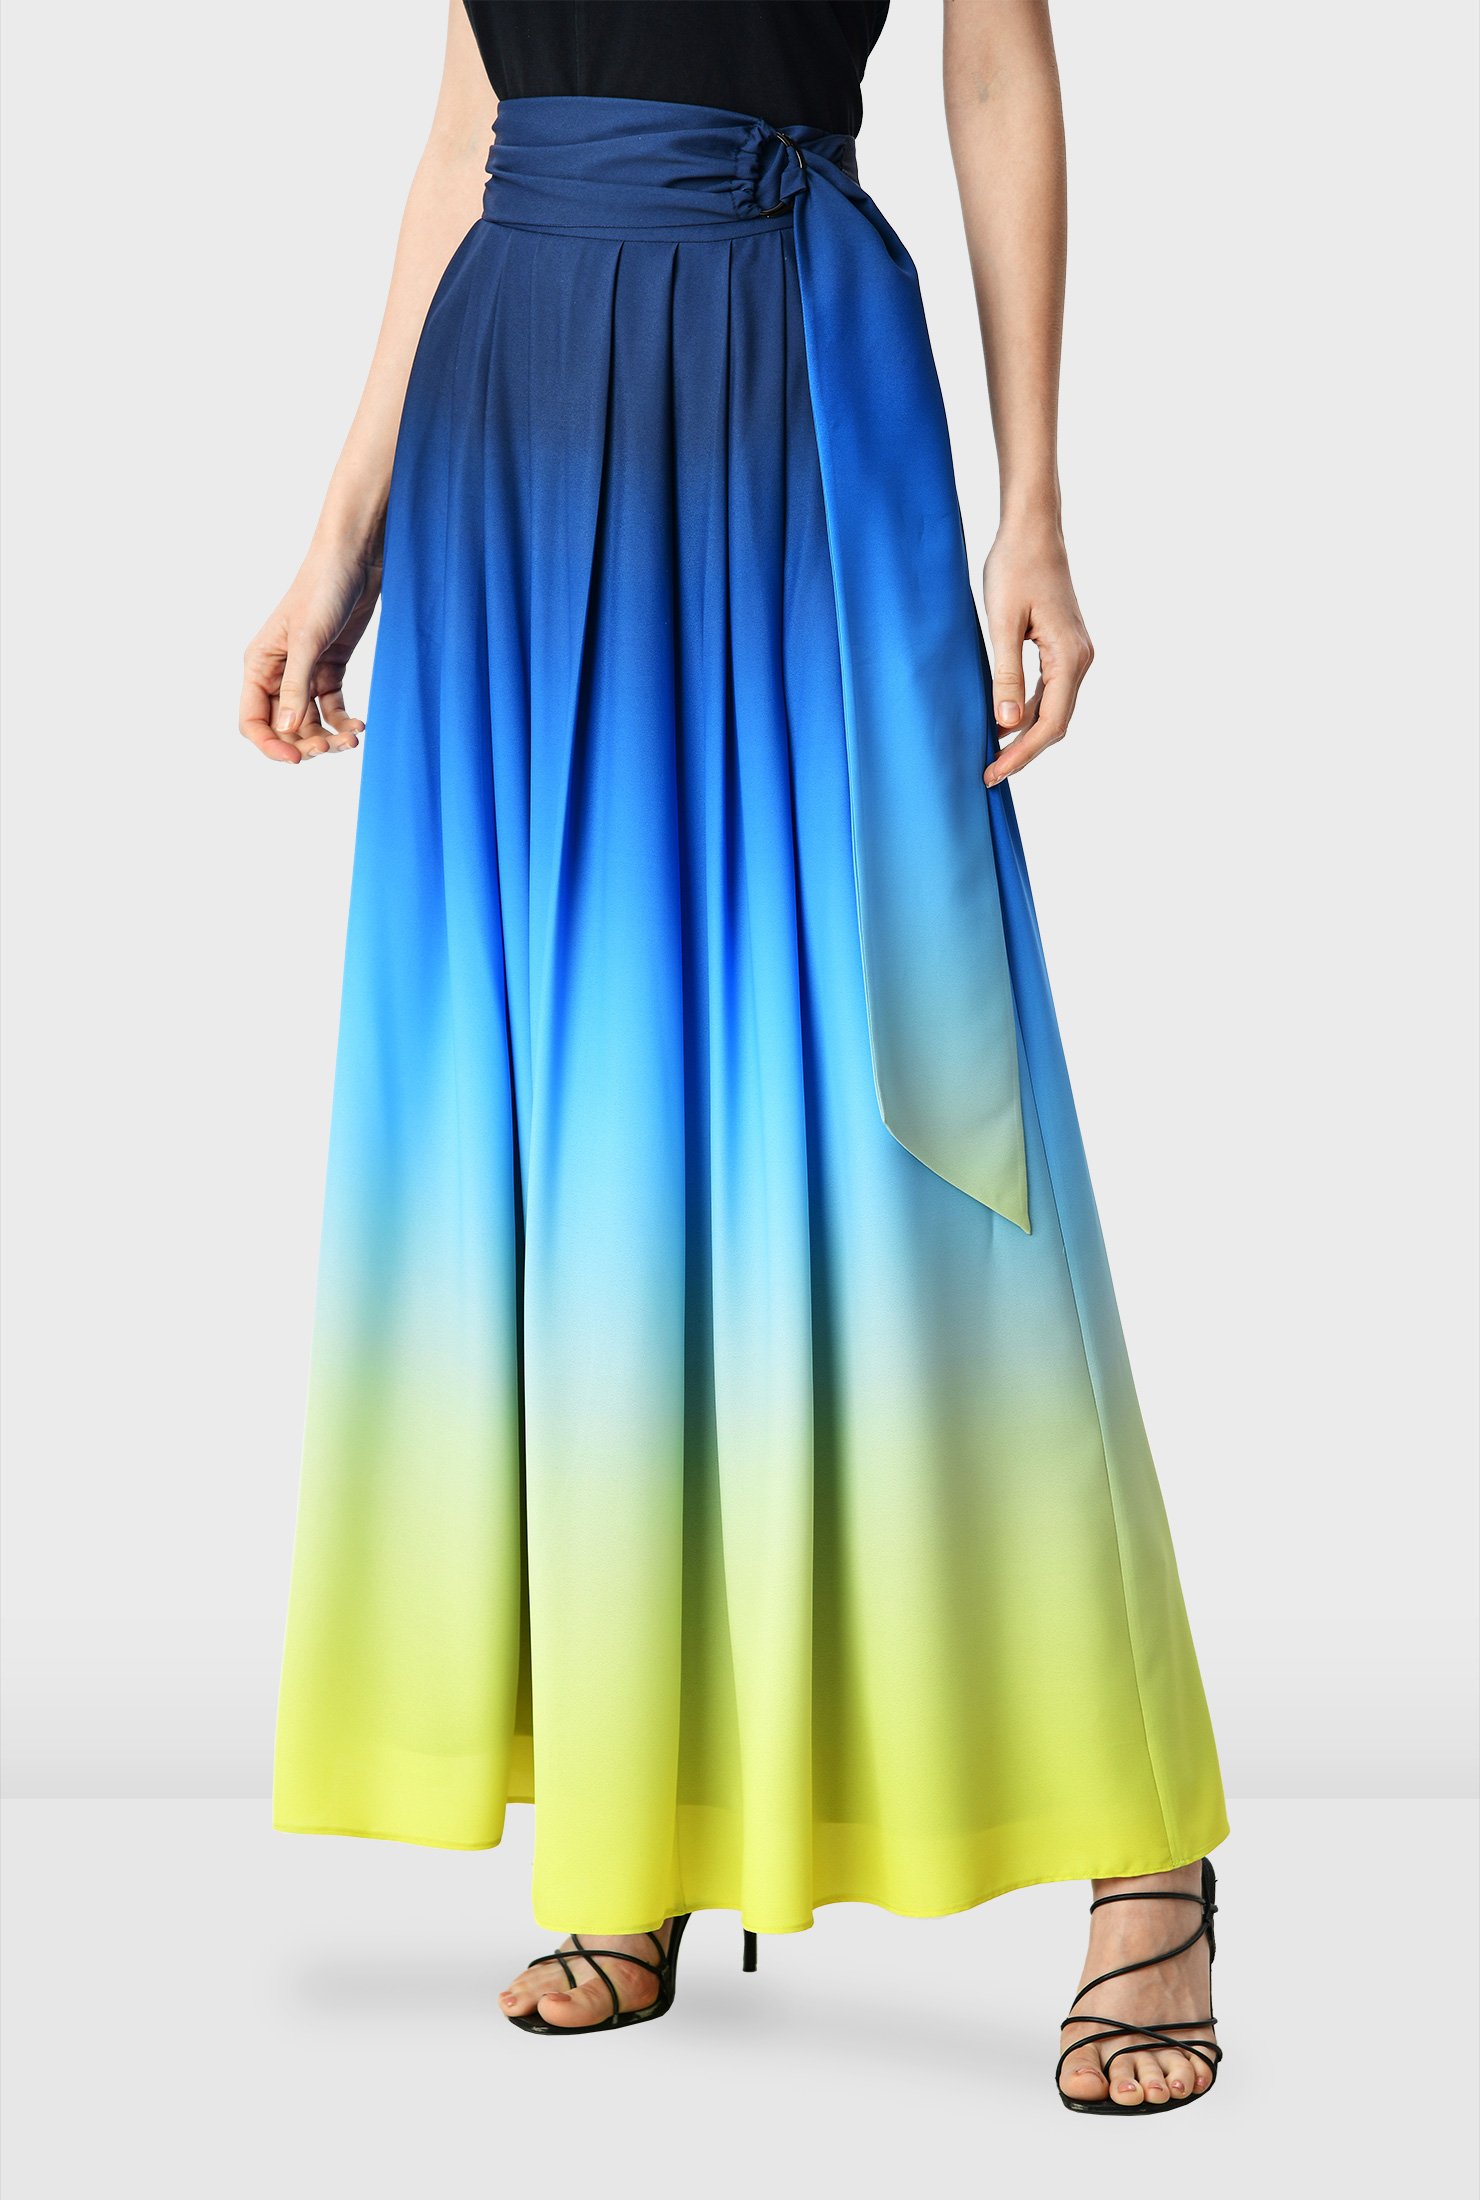 Vibrant ombre print crepe skirt